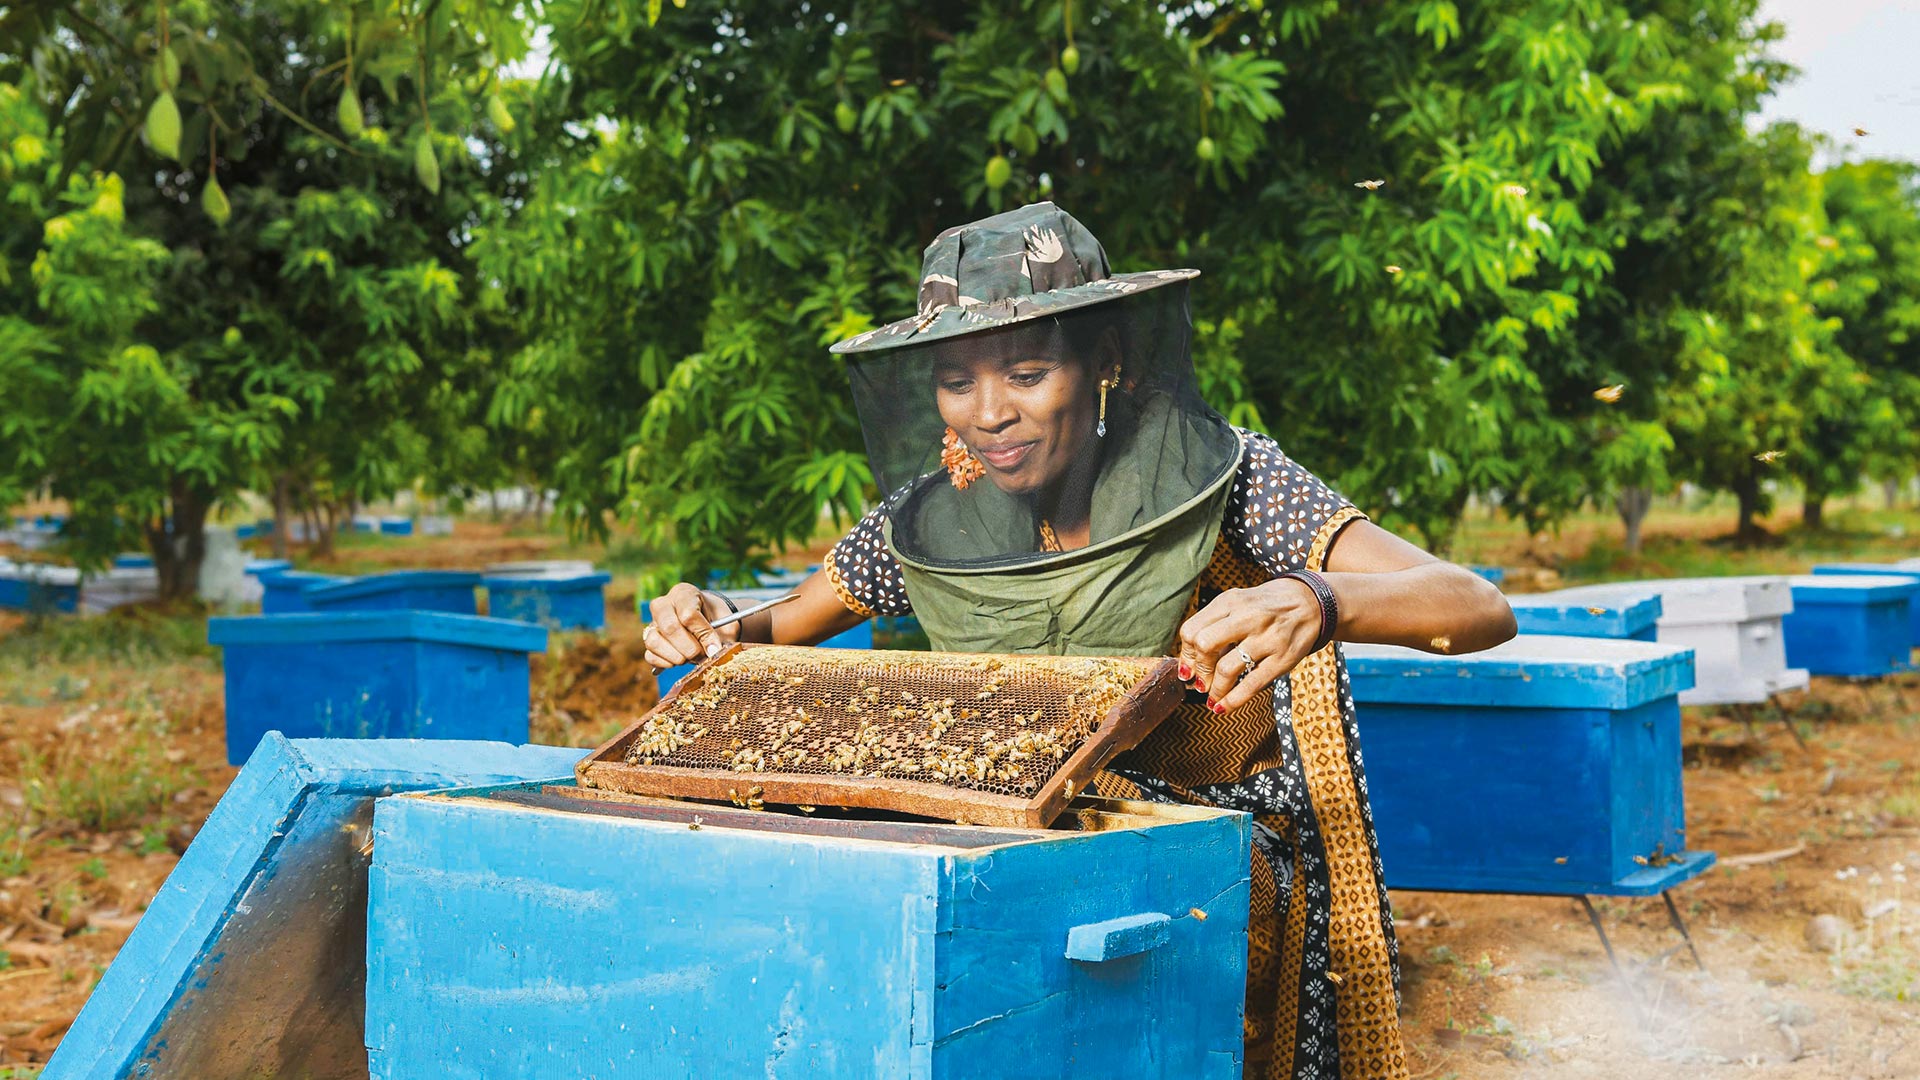 Beekeeping project Tata Trusts Chittoor